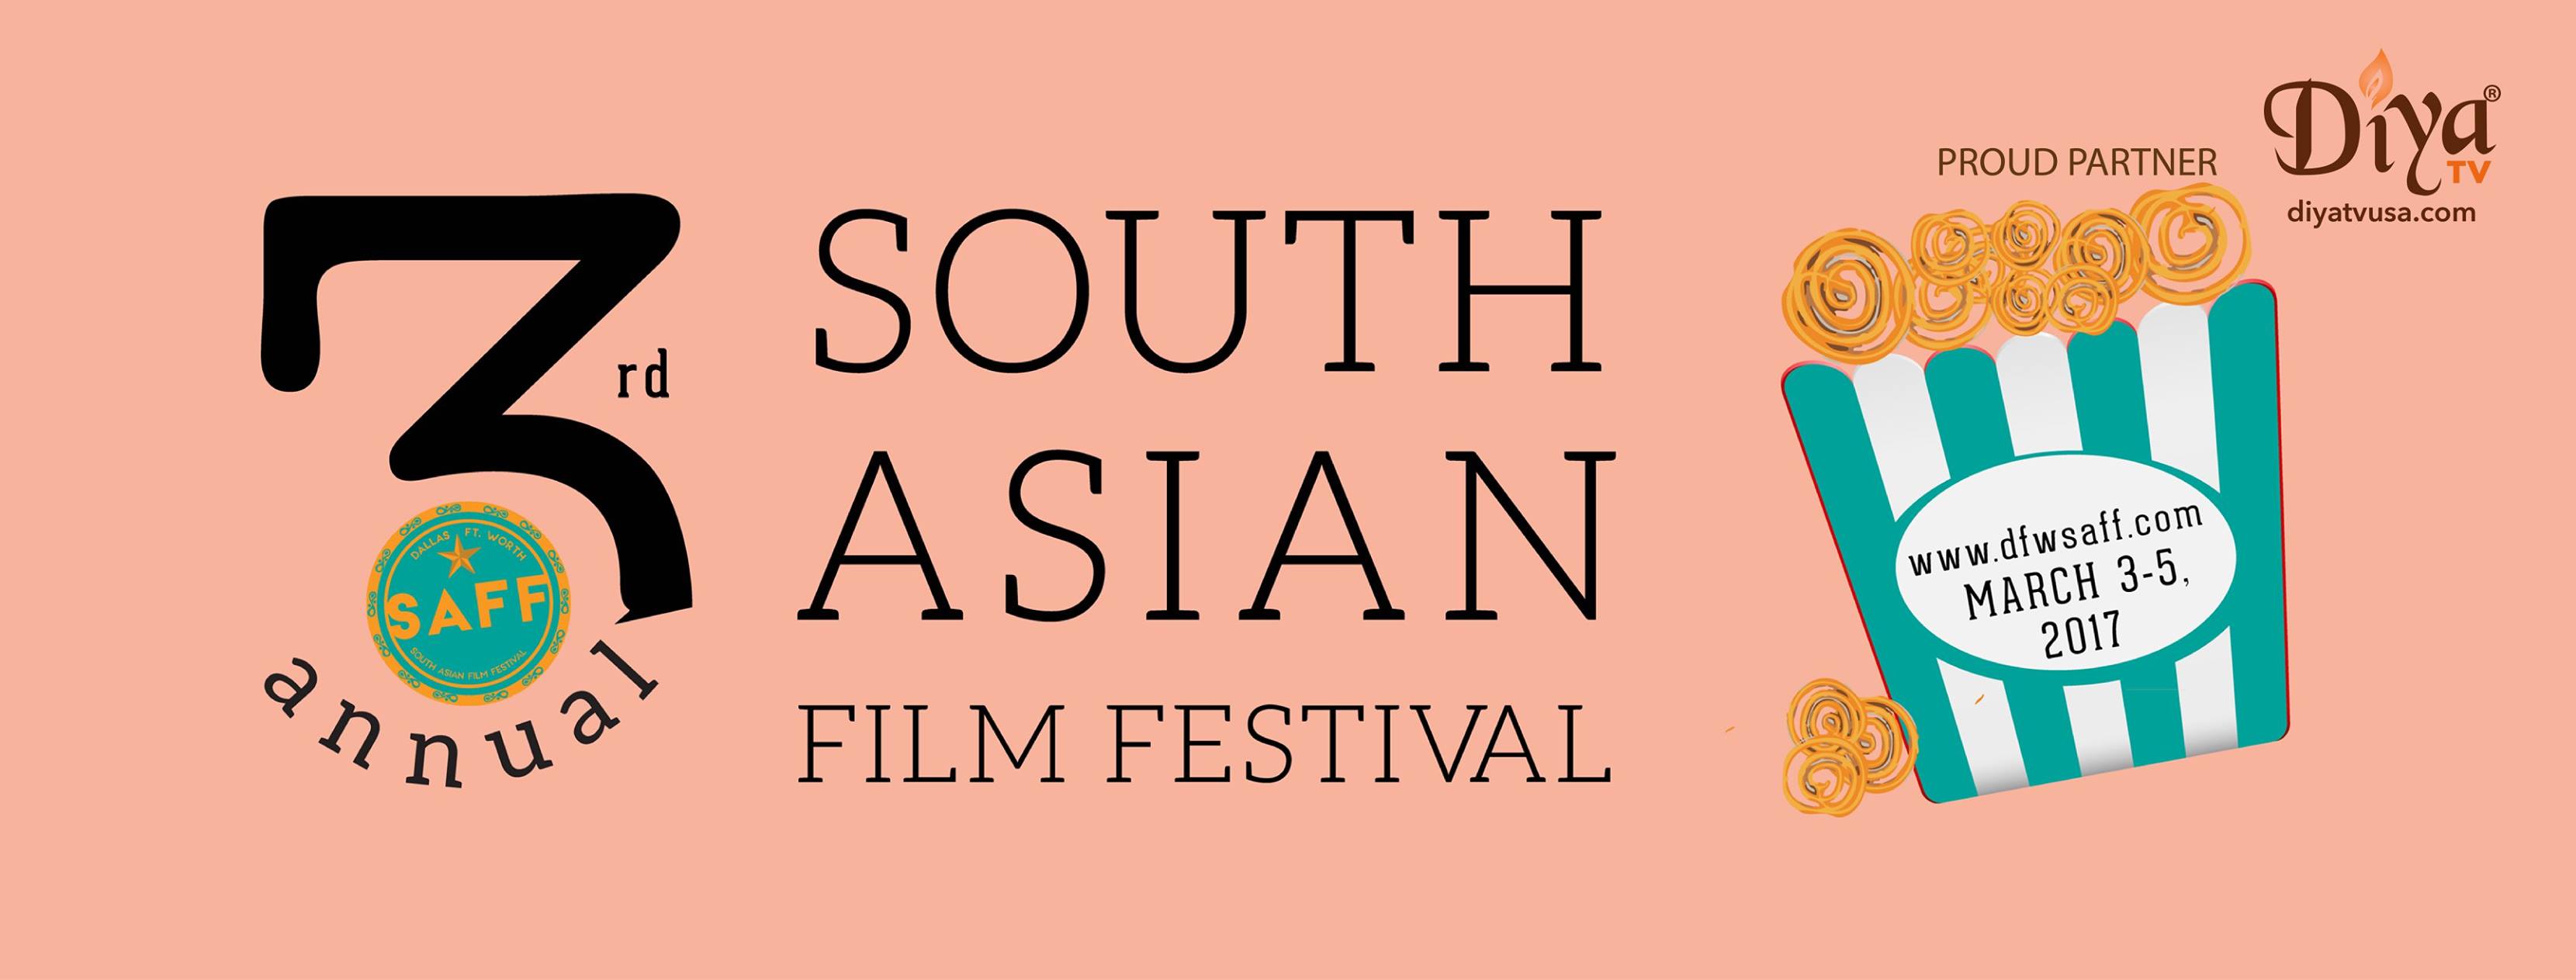 Third Annual Dallas South Asian Film Festival DFWSAFF opens March 3